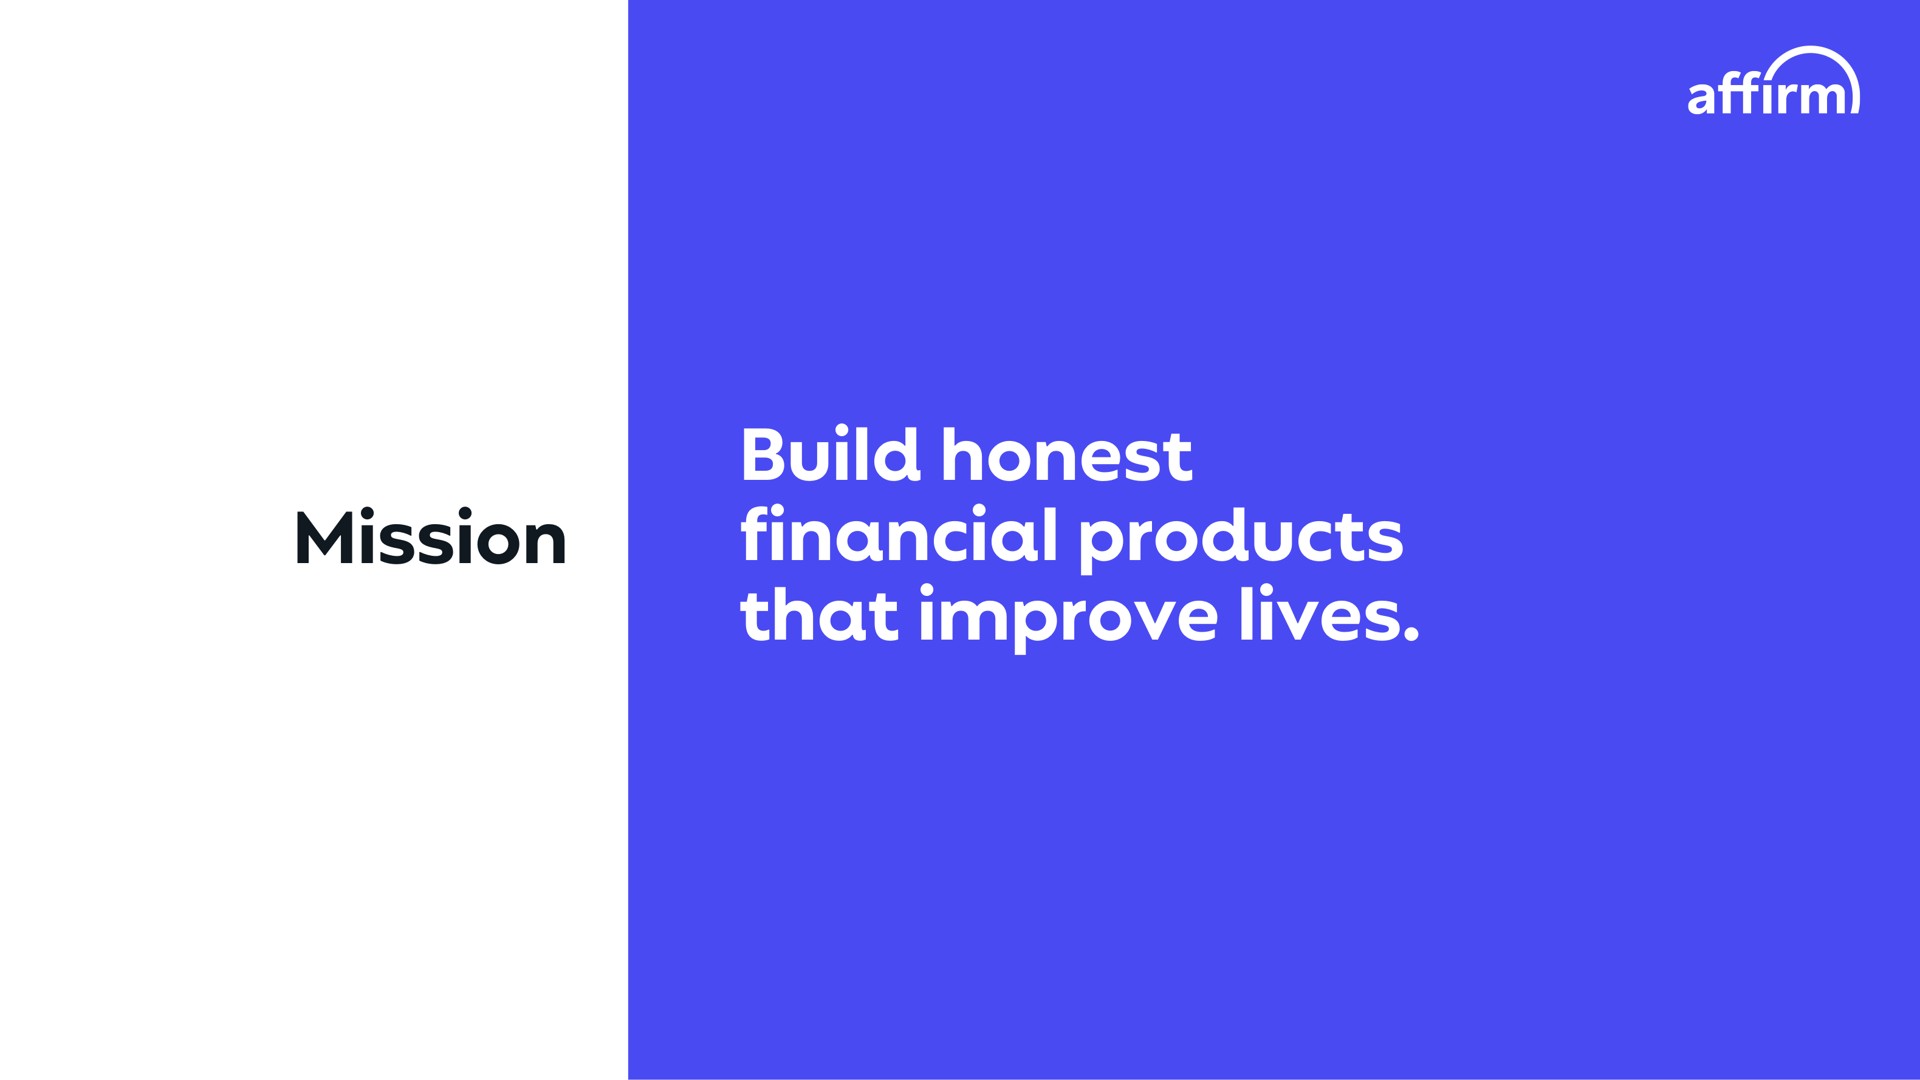 mission build honest financial products that improve lives affirm | Affirm